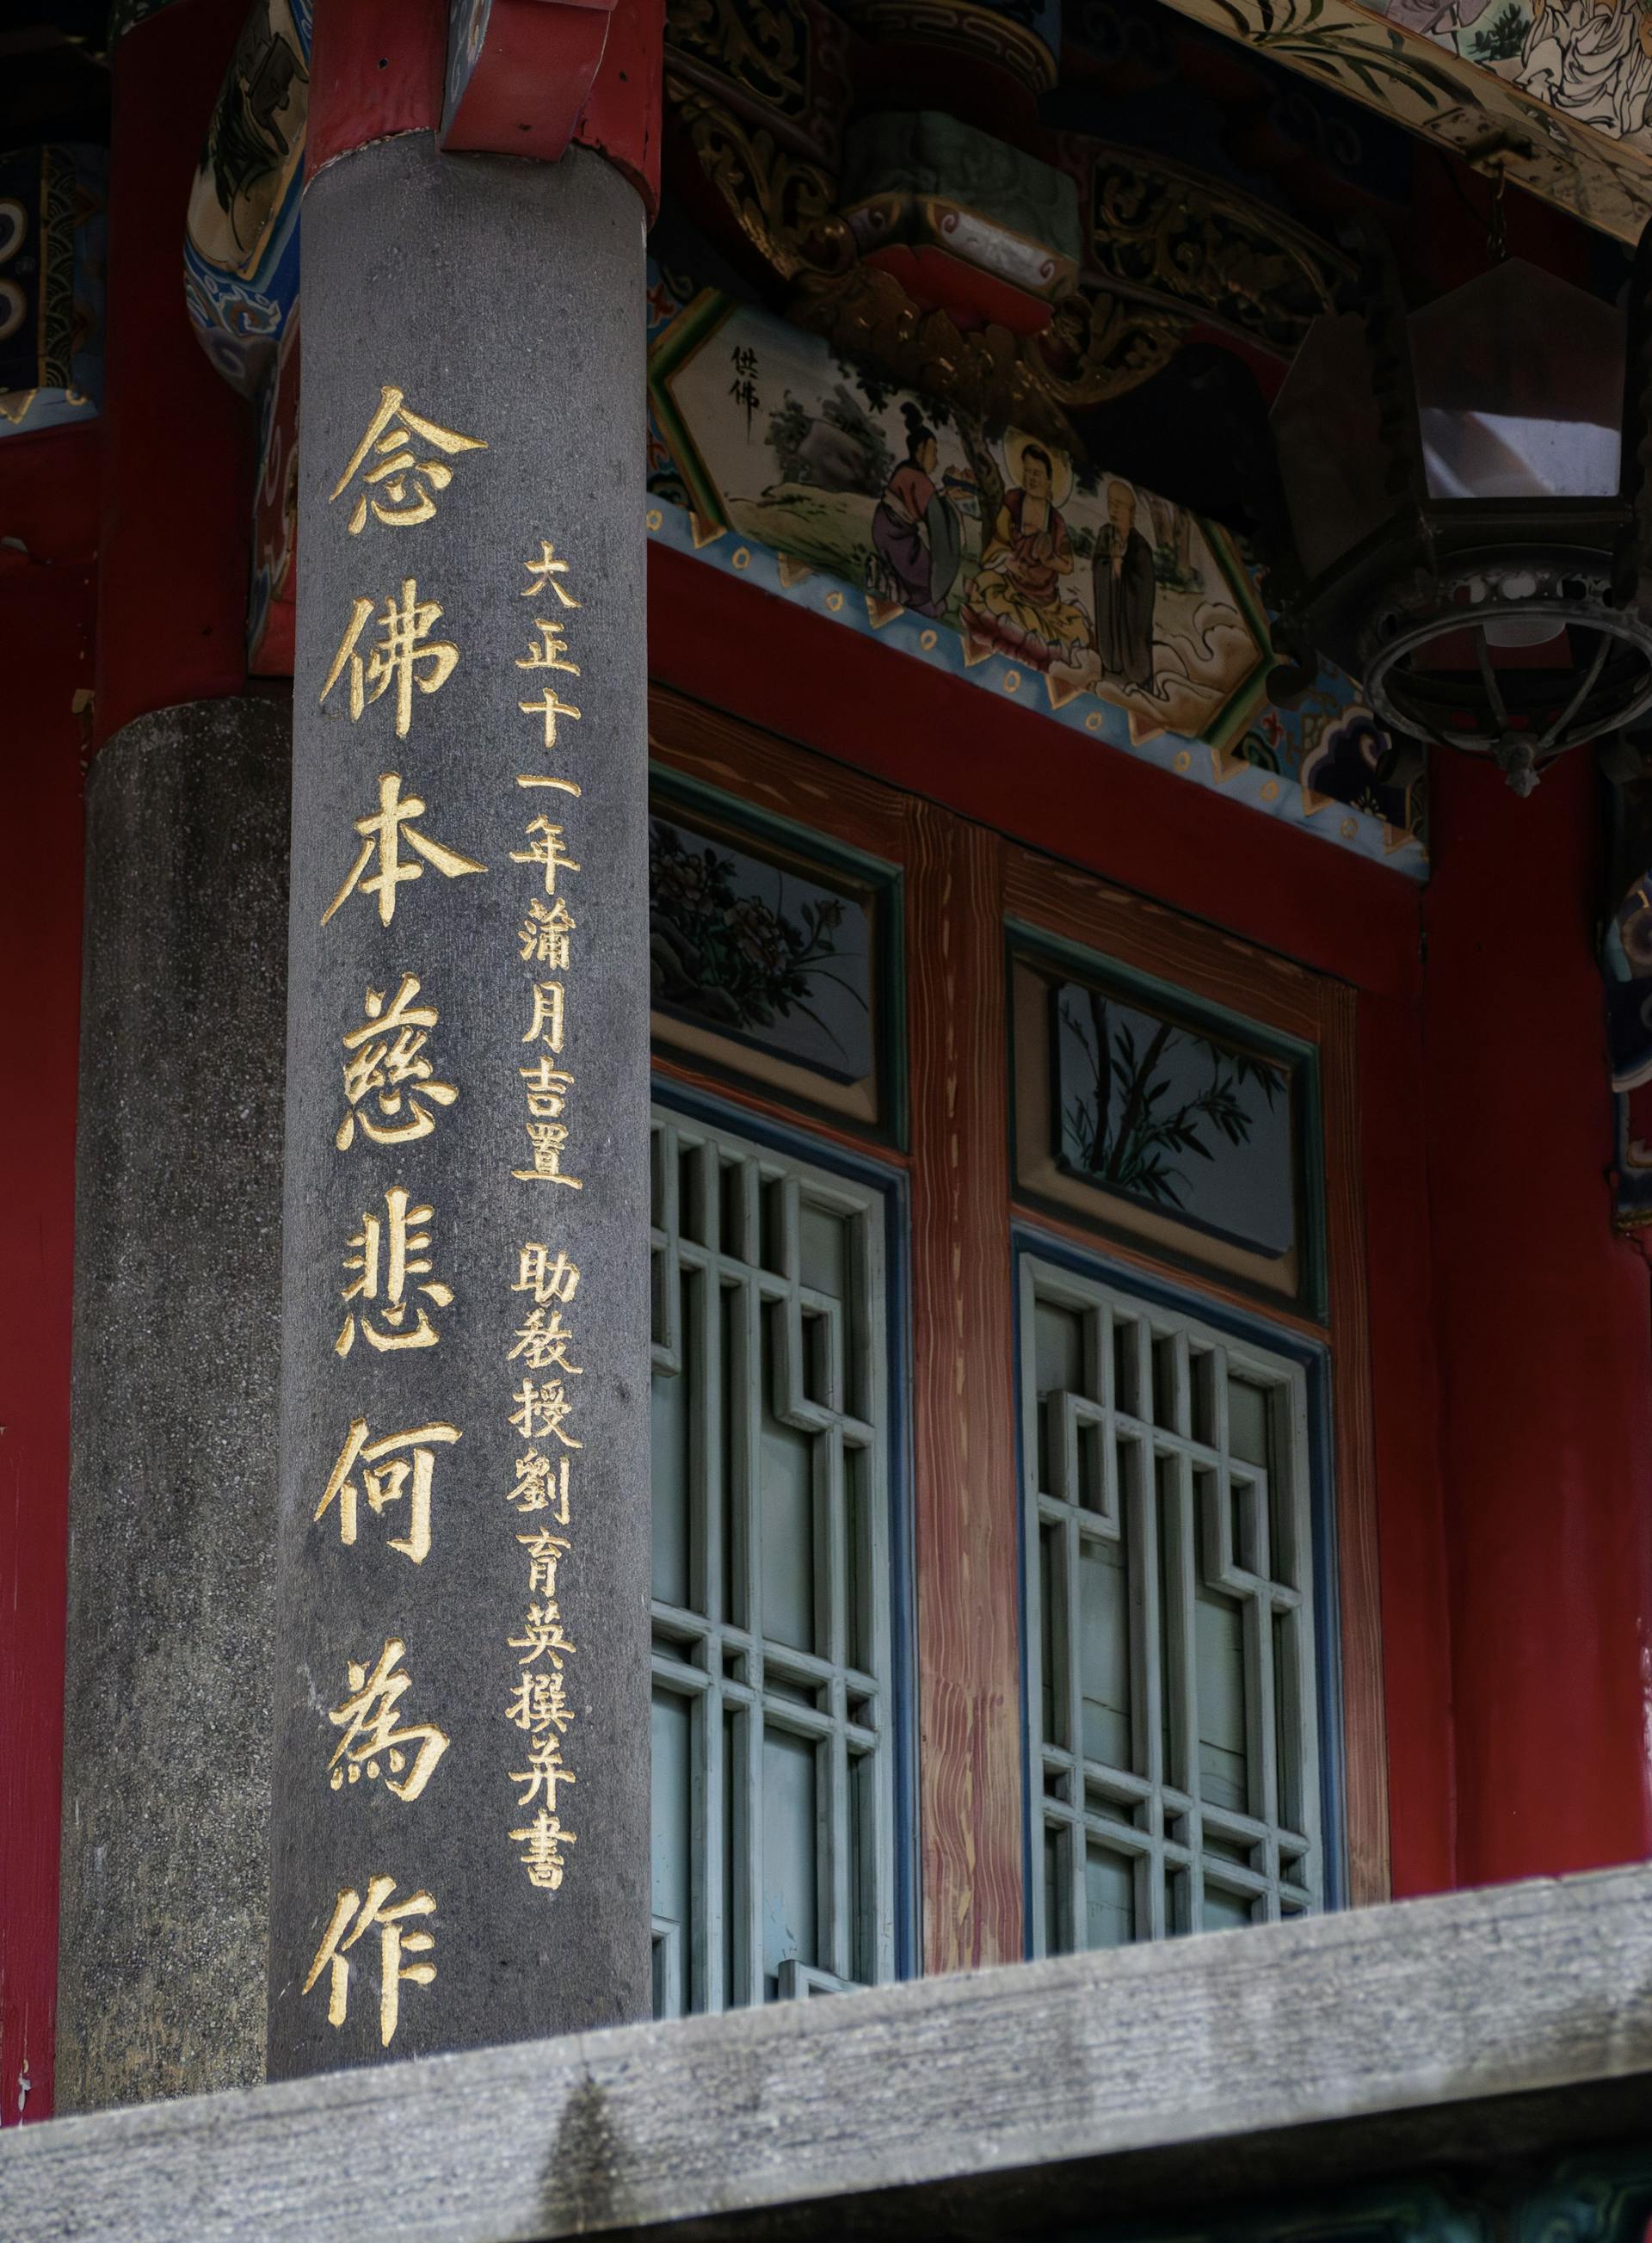 Xingtian Pillar